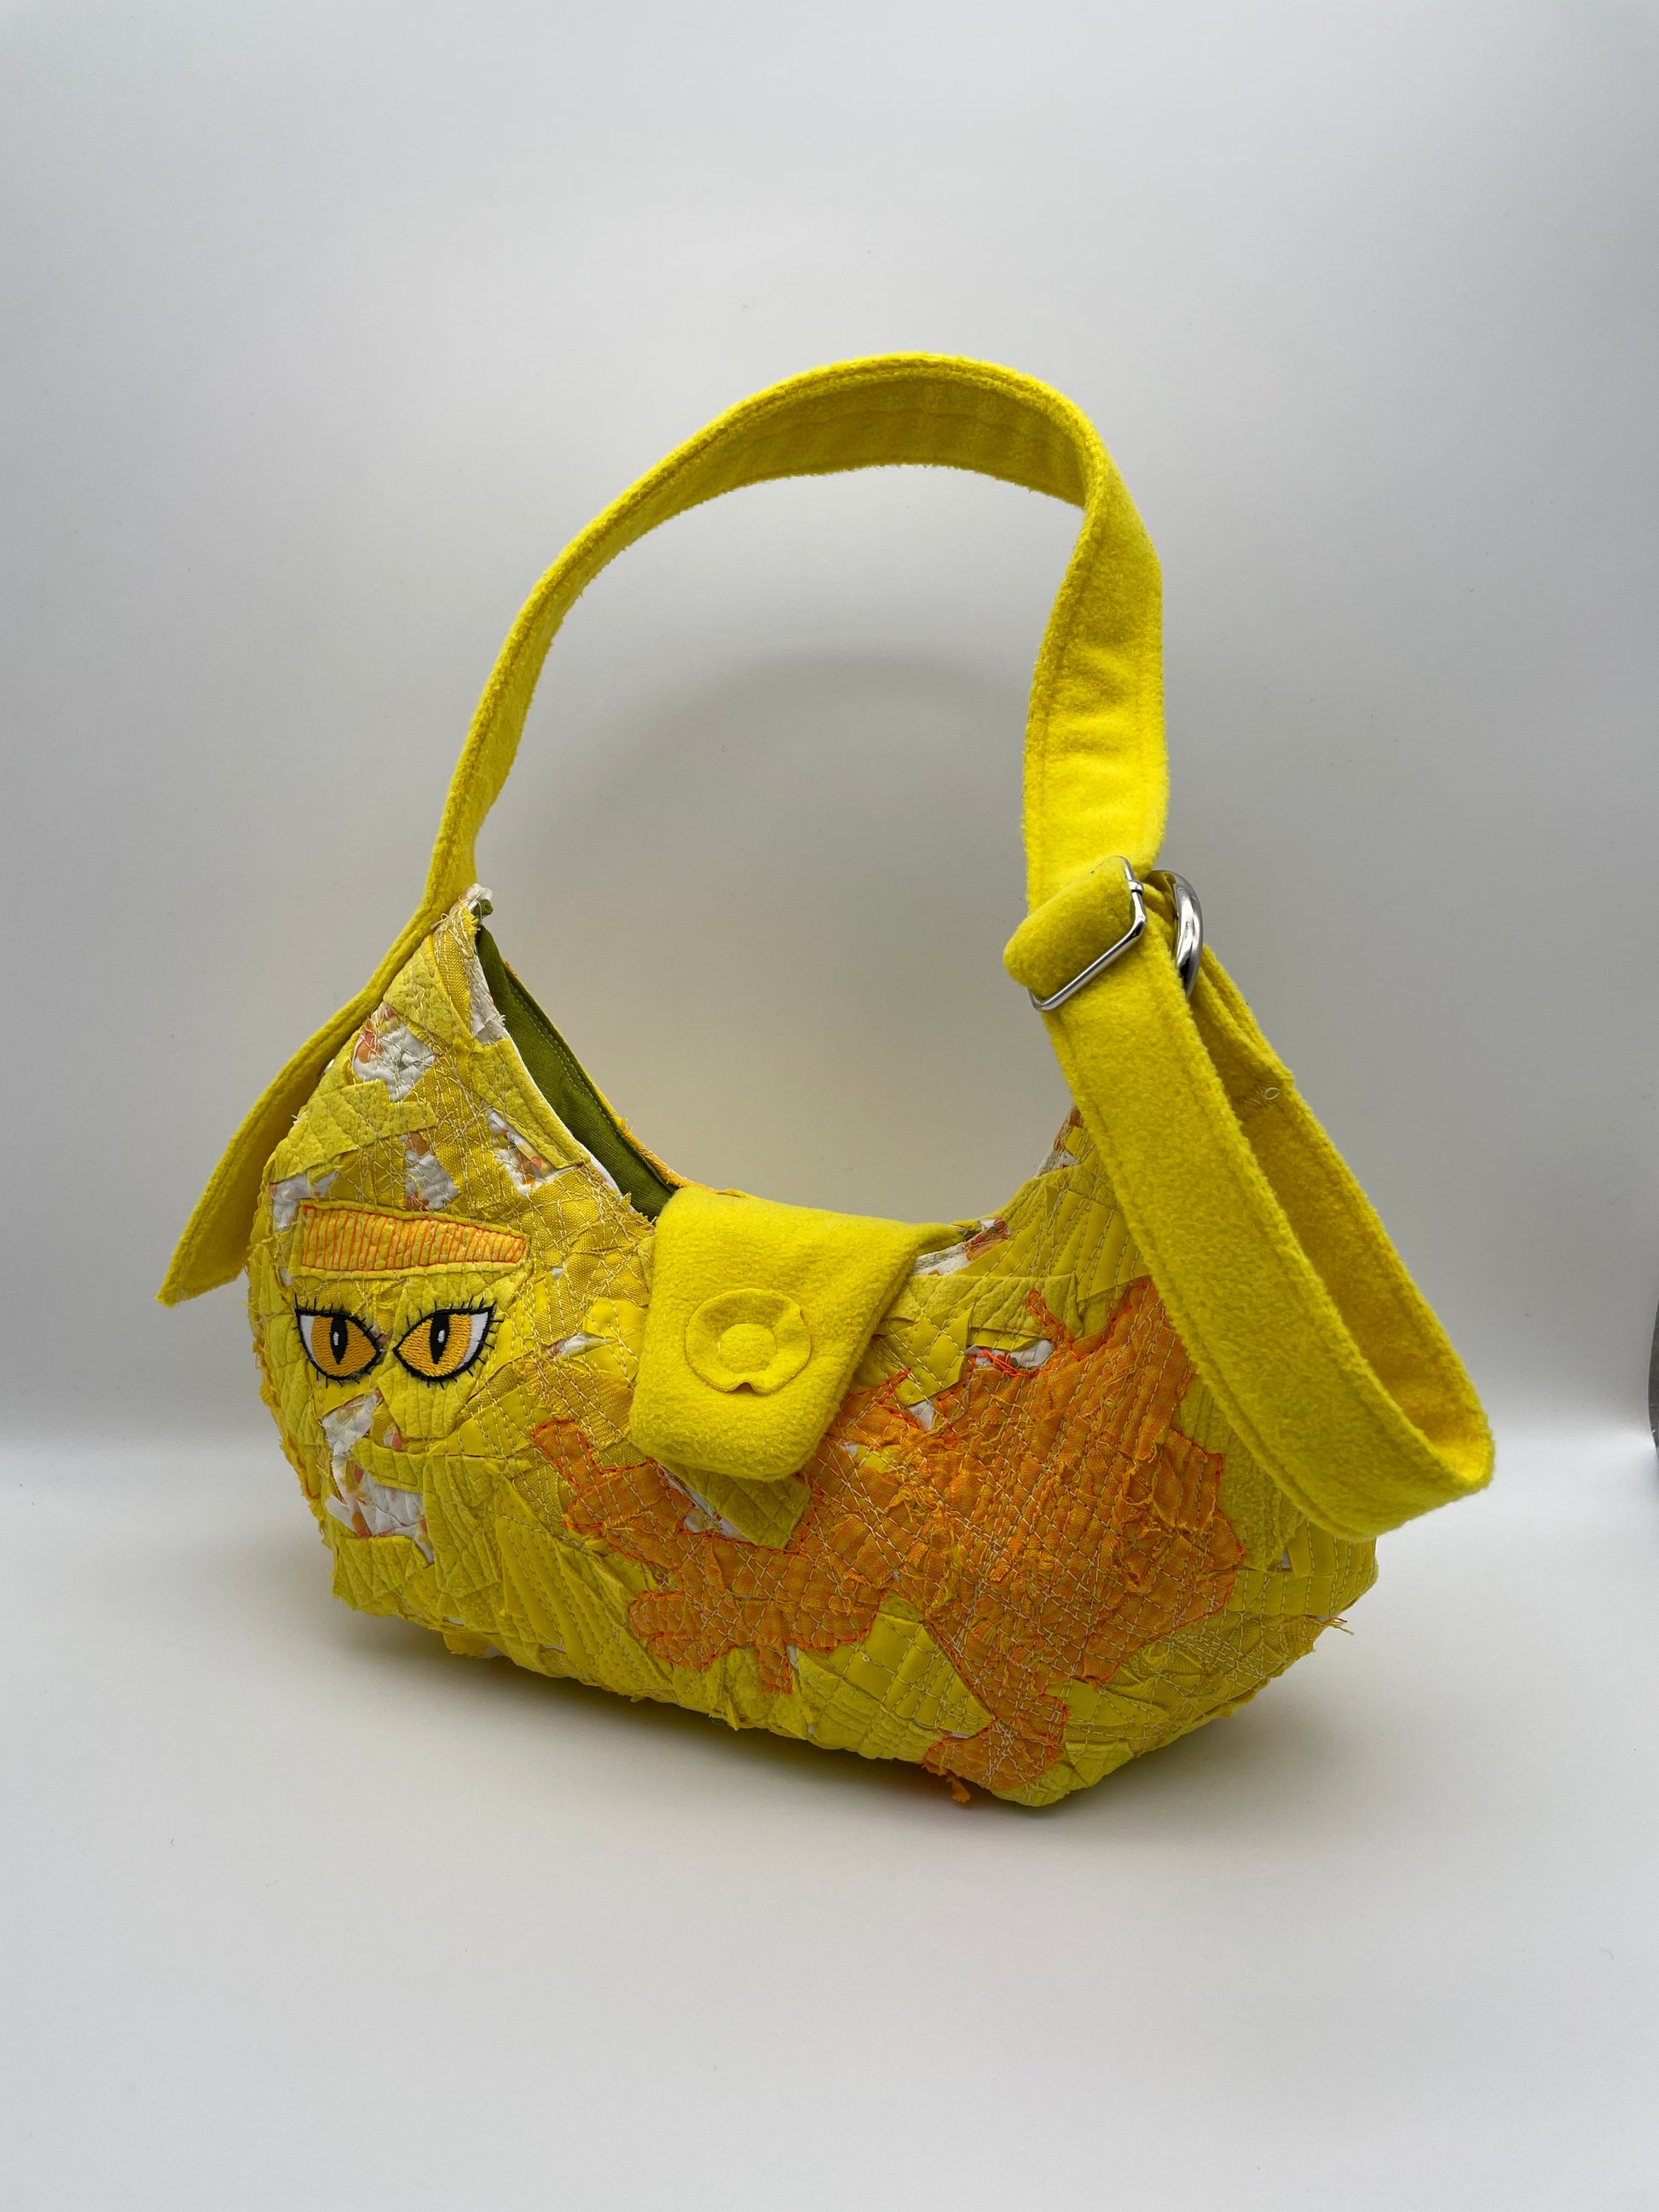 upcycled yellow saffran bag fabric scraps upcycling eyes handmade bag wild sewed bag